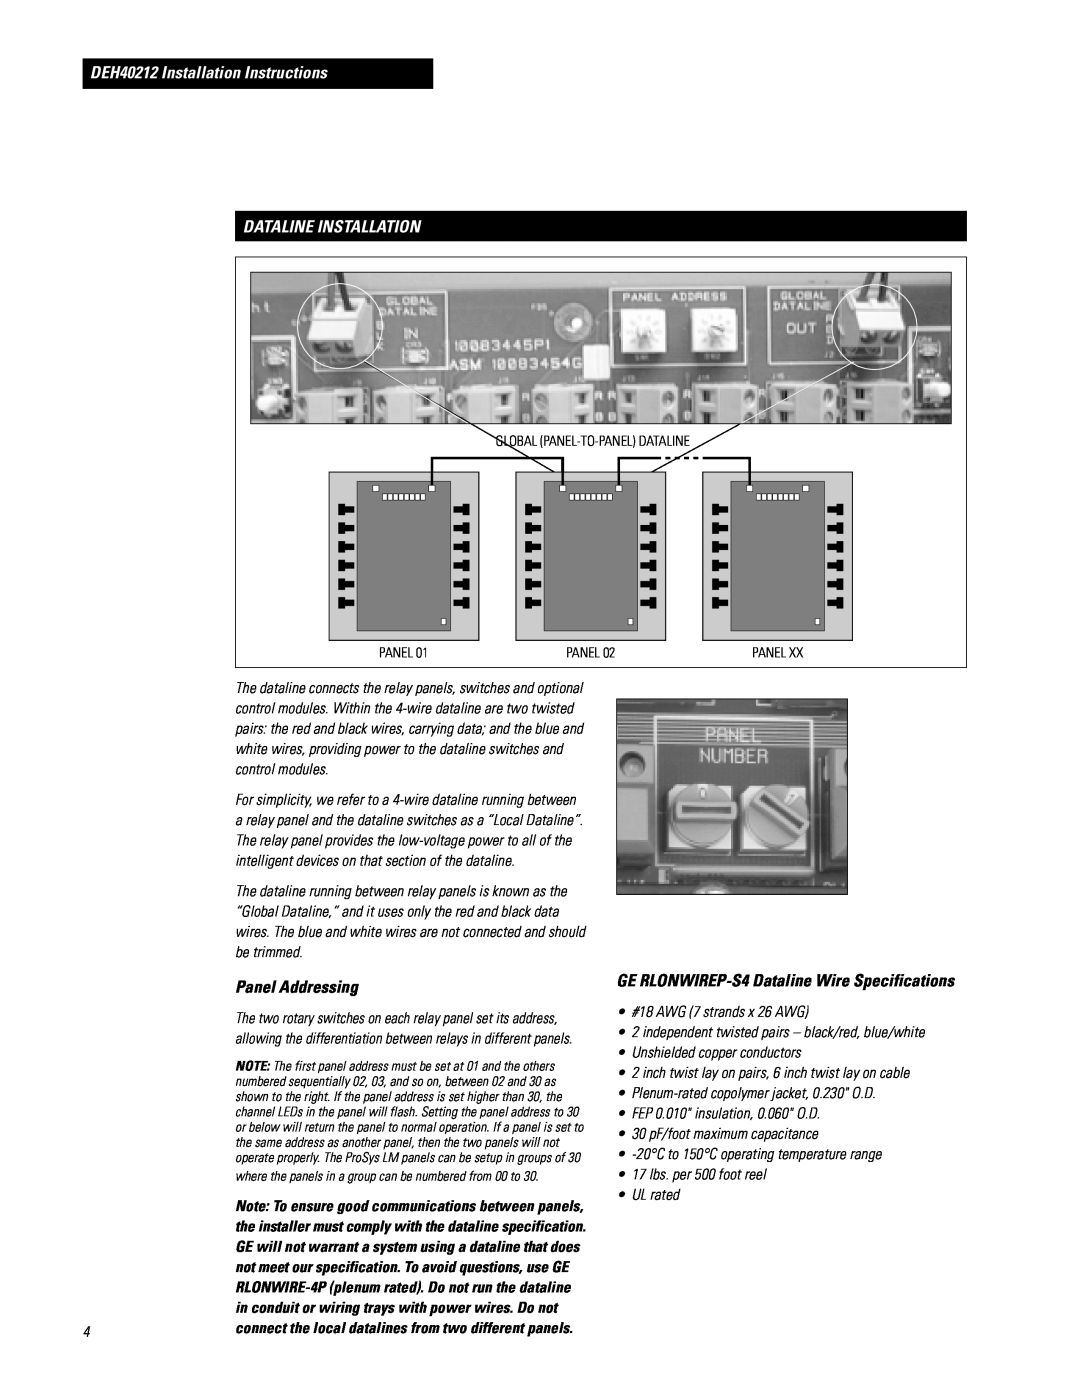 GE RINTERxxxPS(P) installation instructions Dataline Installation, DEH40212 Installation Instructions, Panel Addressing 